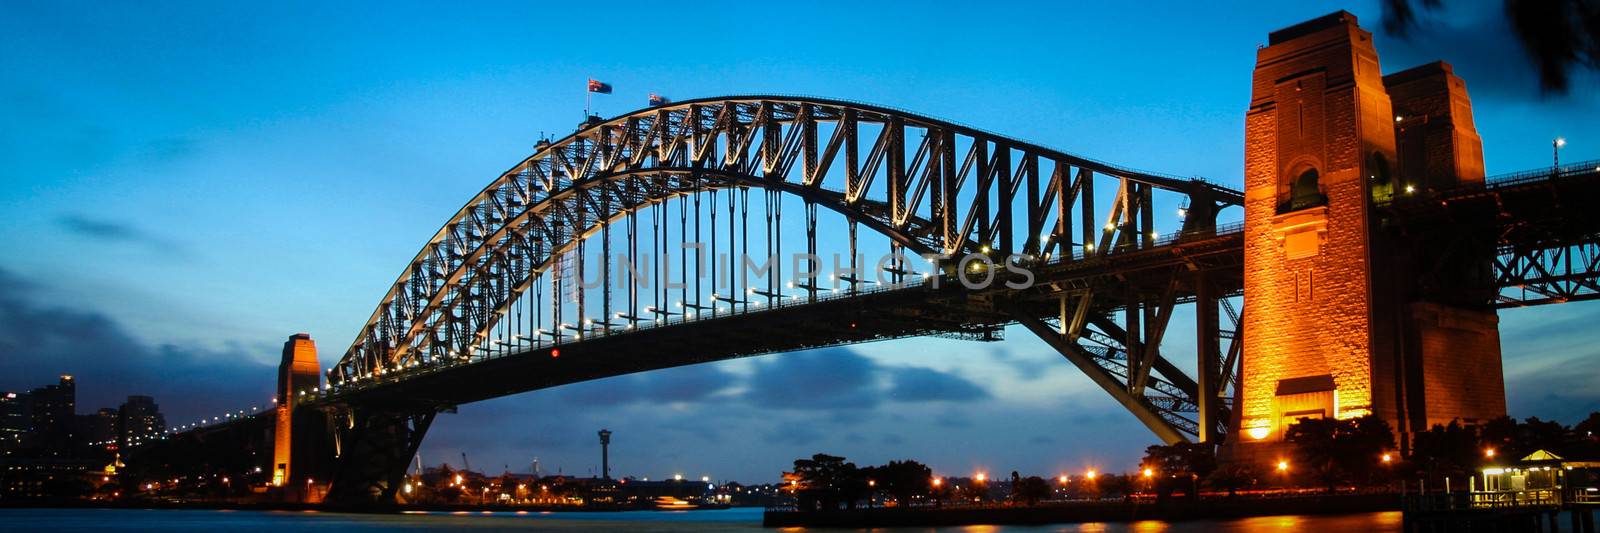 Sydney harbour bridge by CelsoDiniz